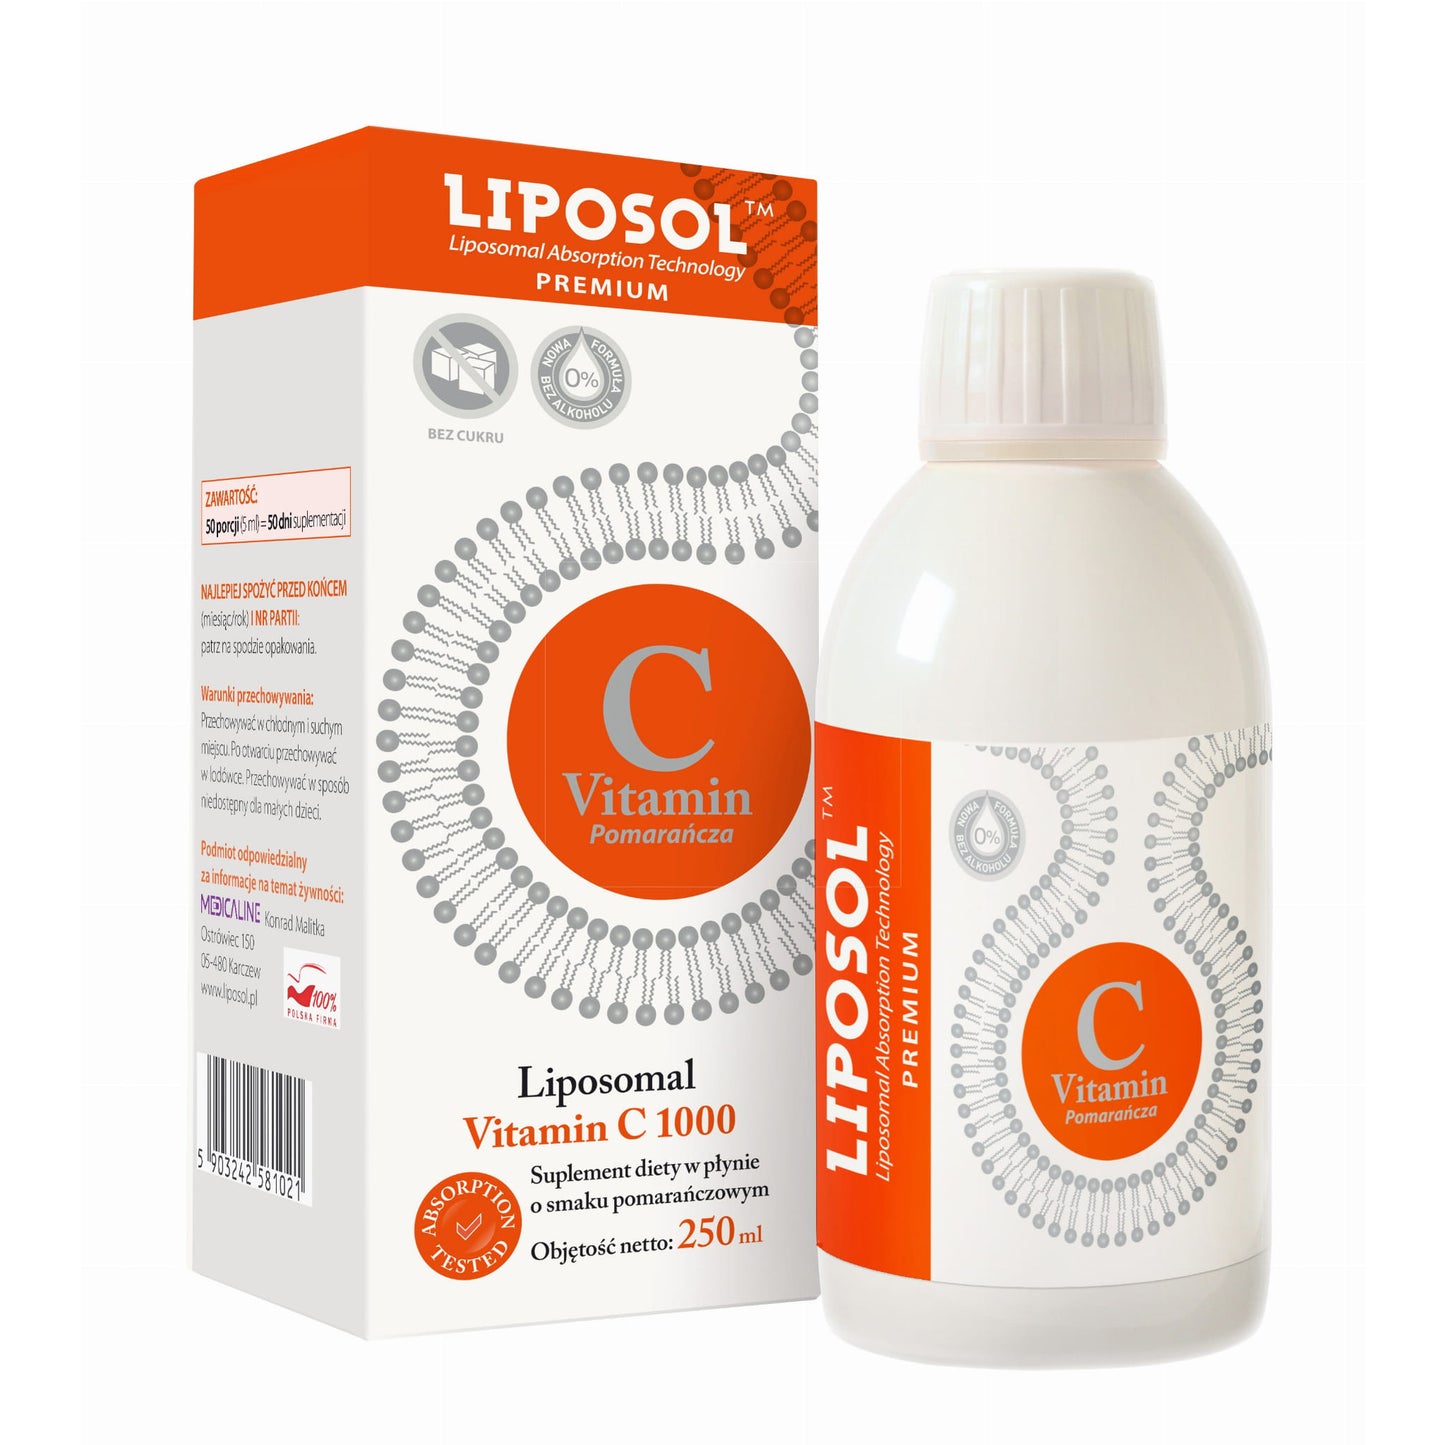 Liposol, Liposomal Vitamin C 1000mg, 250ml, orange flavour, Liposol, Aliness